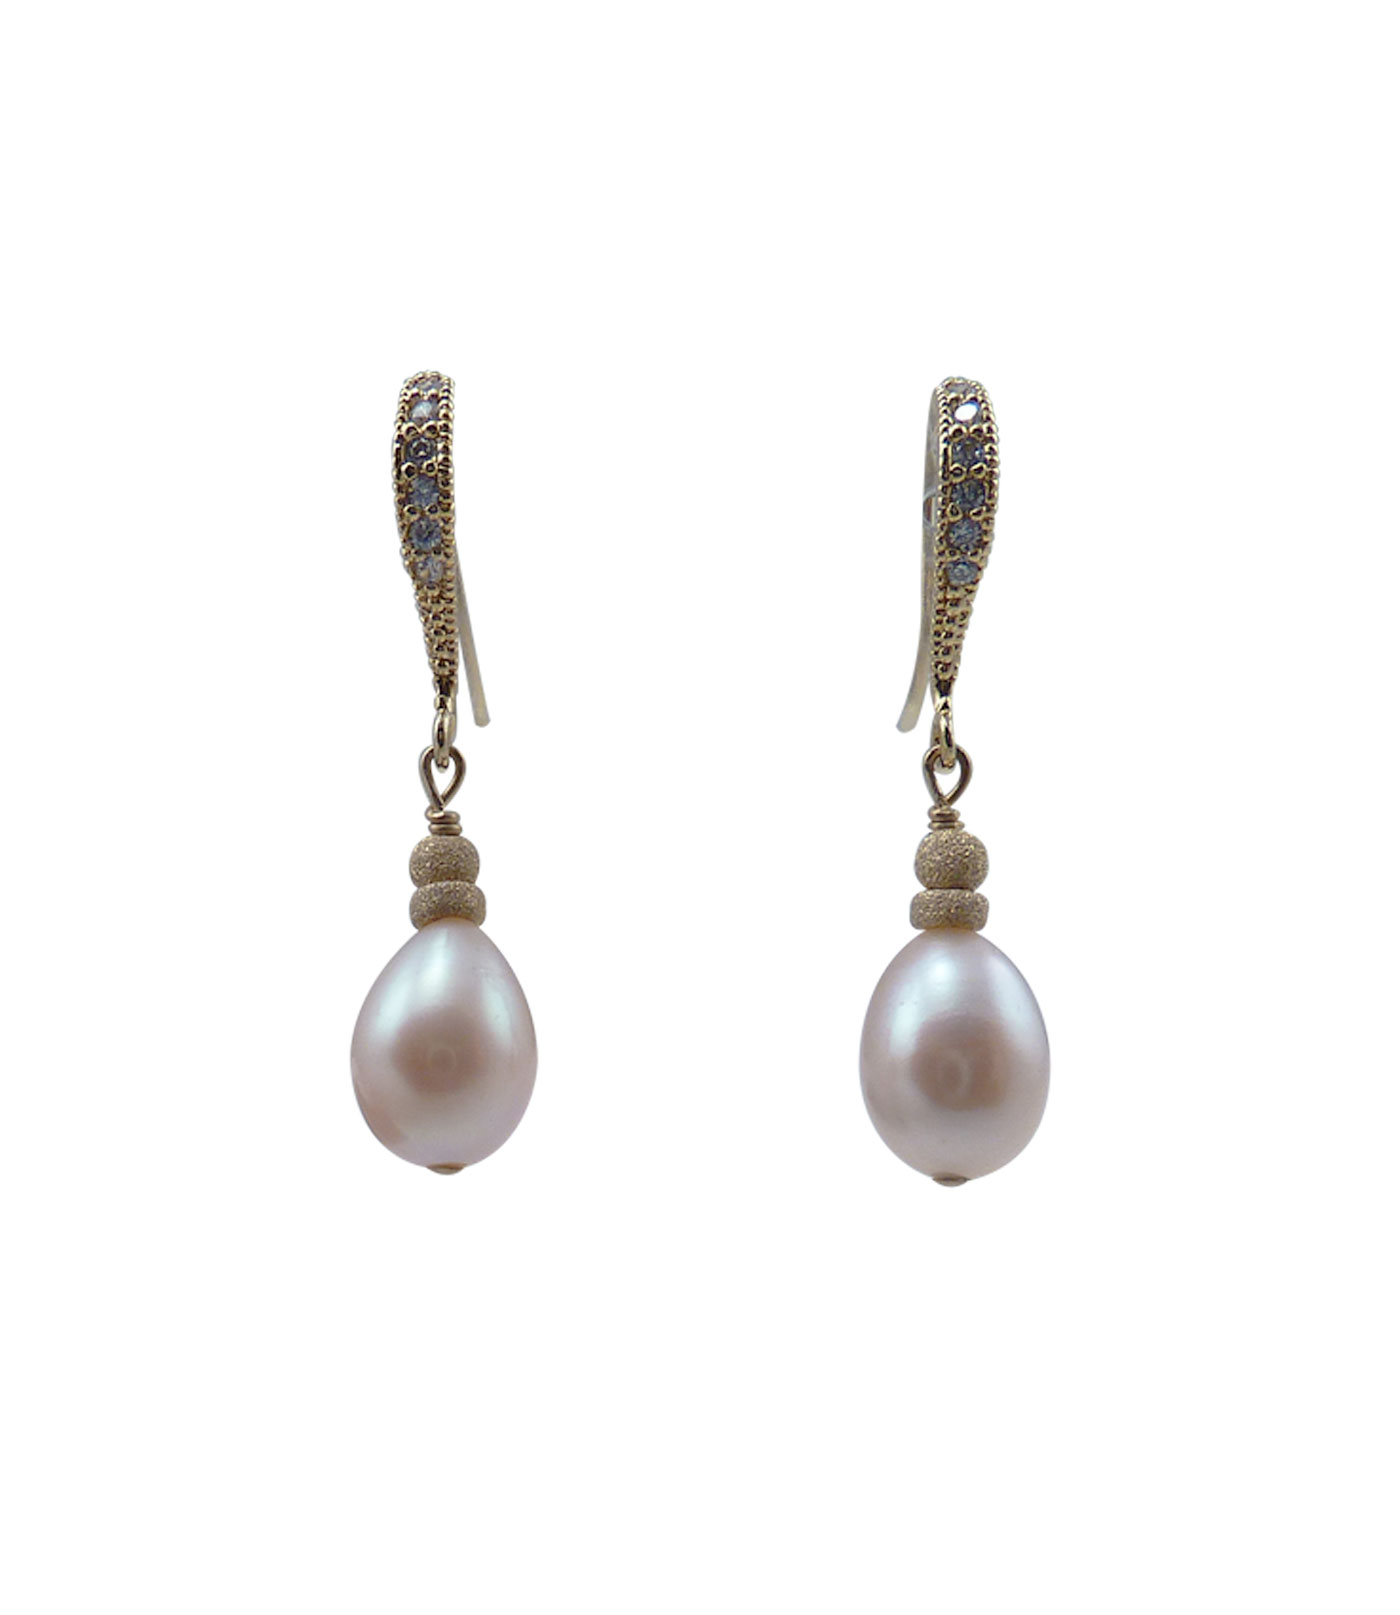 Designer pearl earrings drop shaped pearls. Modern pearl jewelry